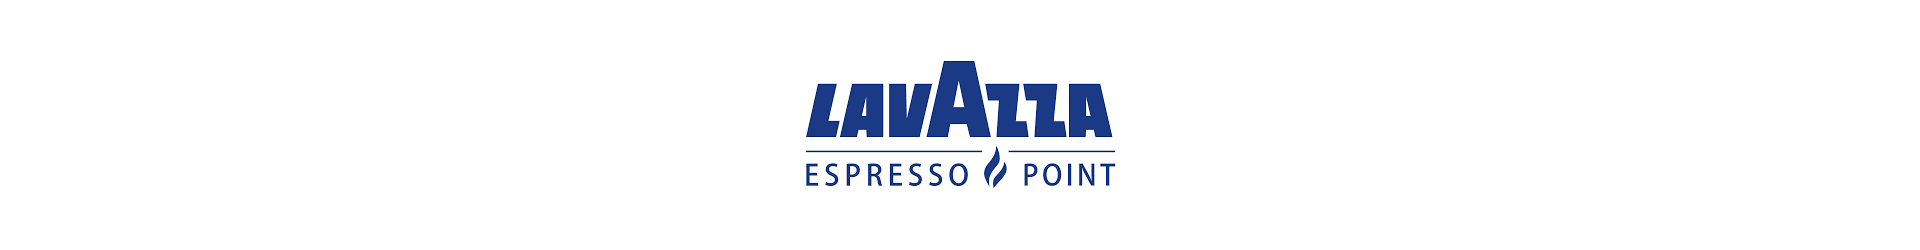 Espresso Point